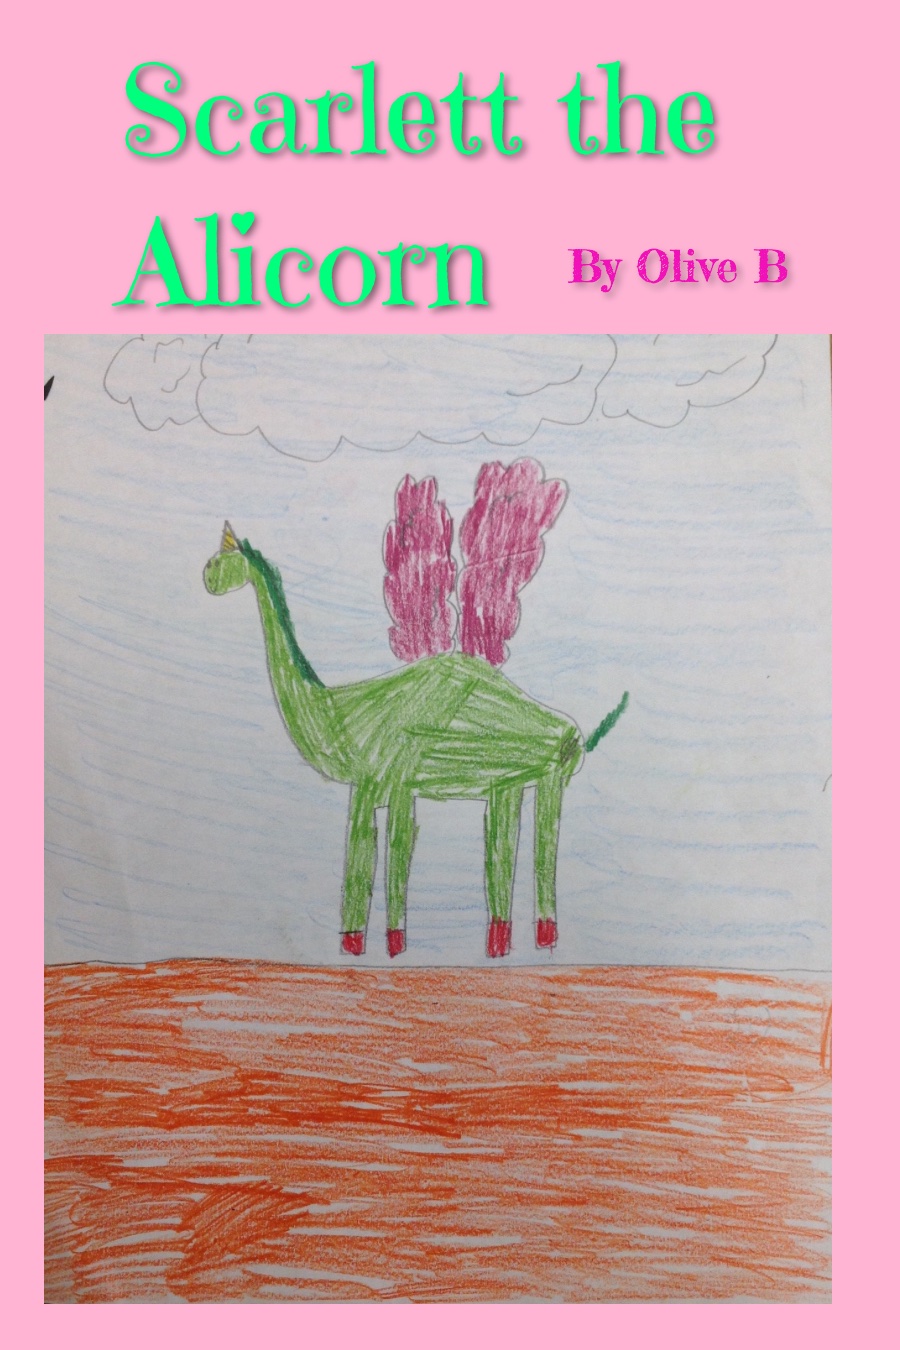 Scarlett the Alicorn by Olive B